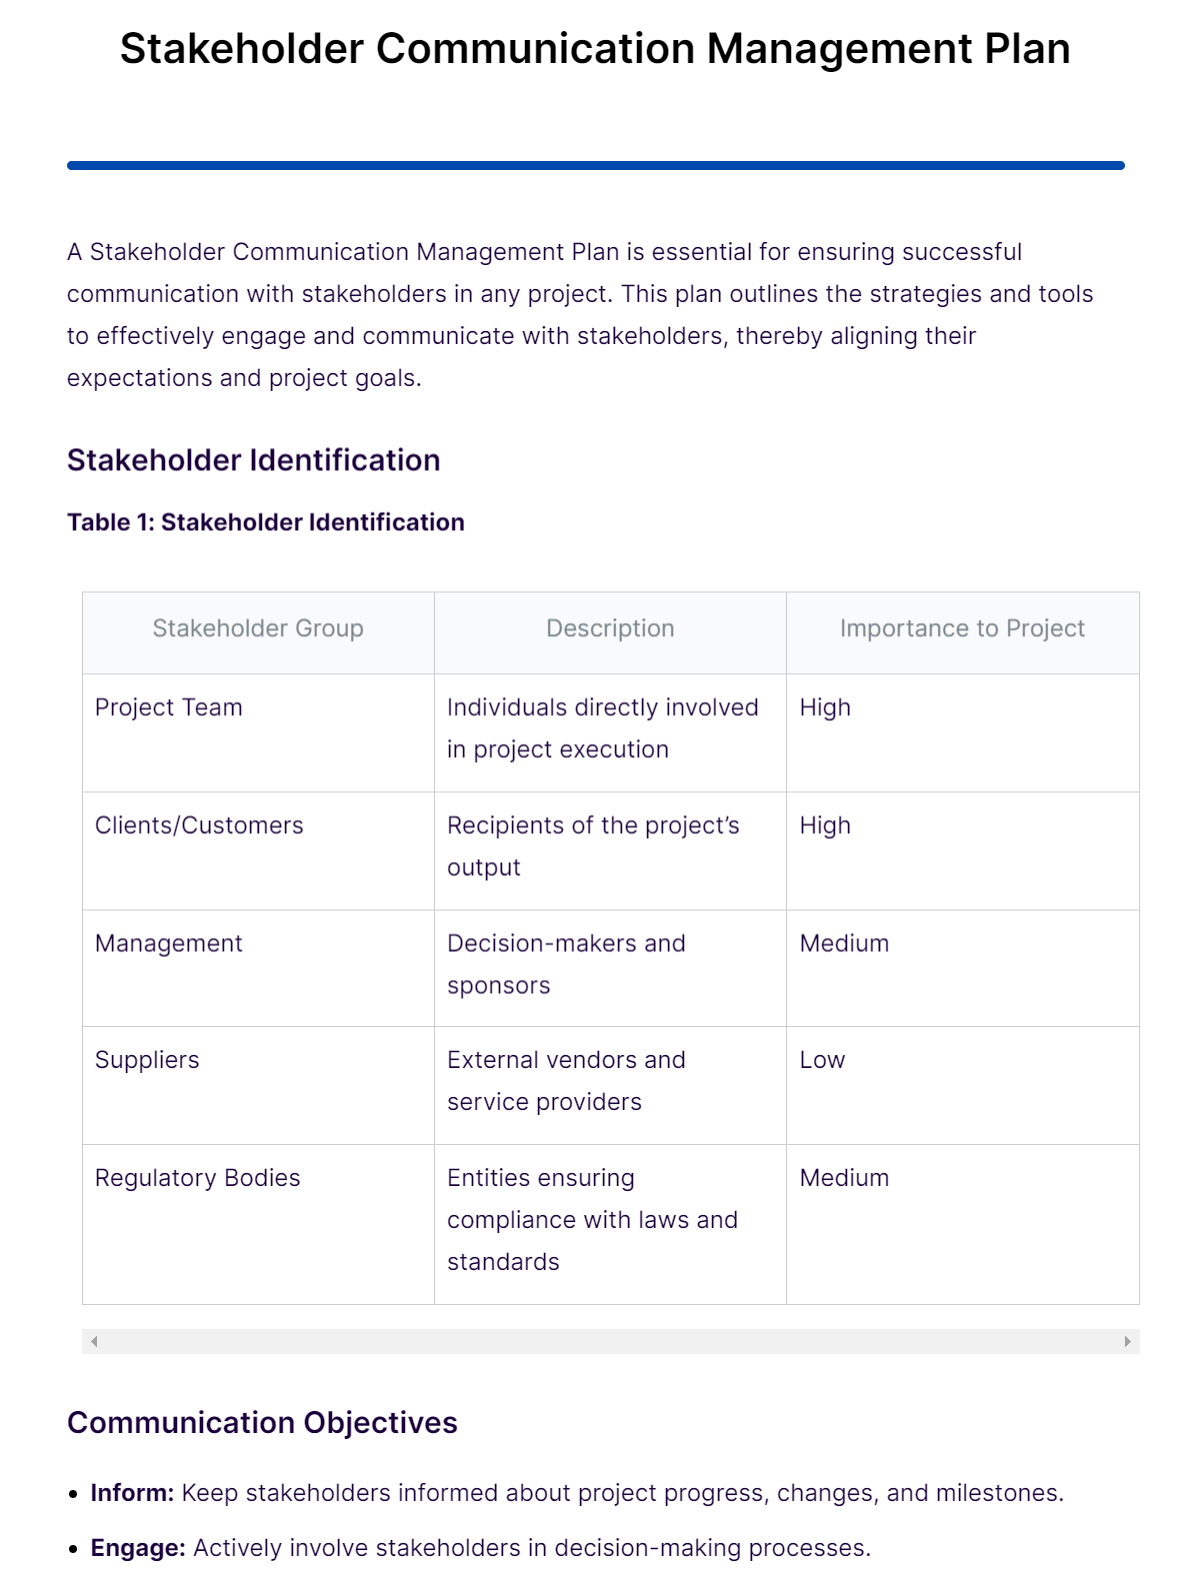 Stakeholder-Communication-Management-Plan2